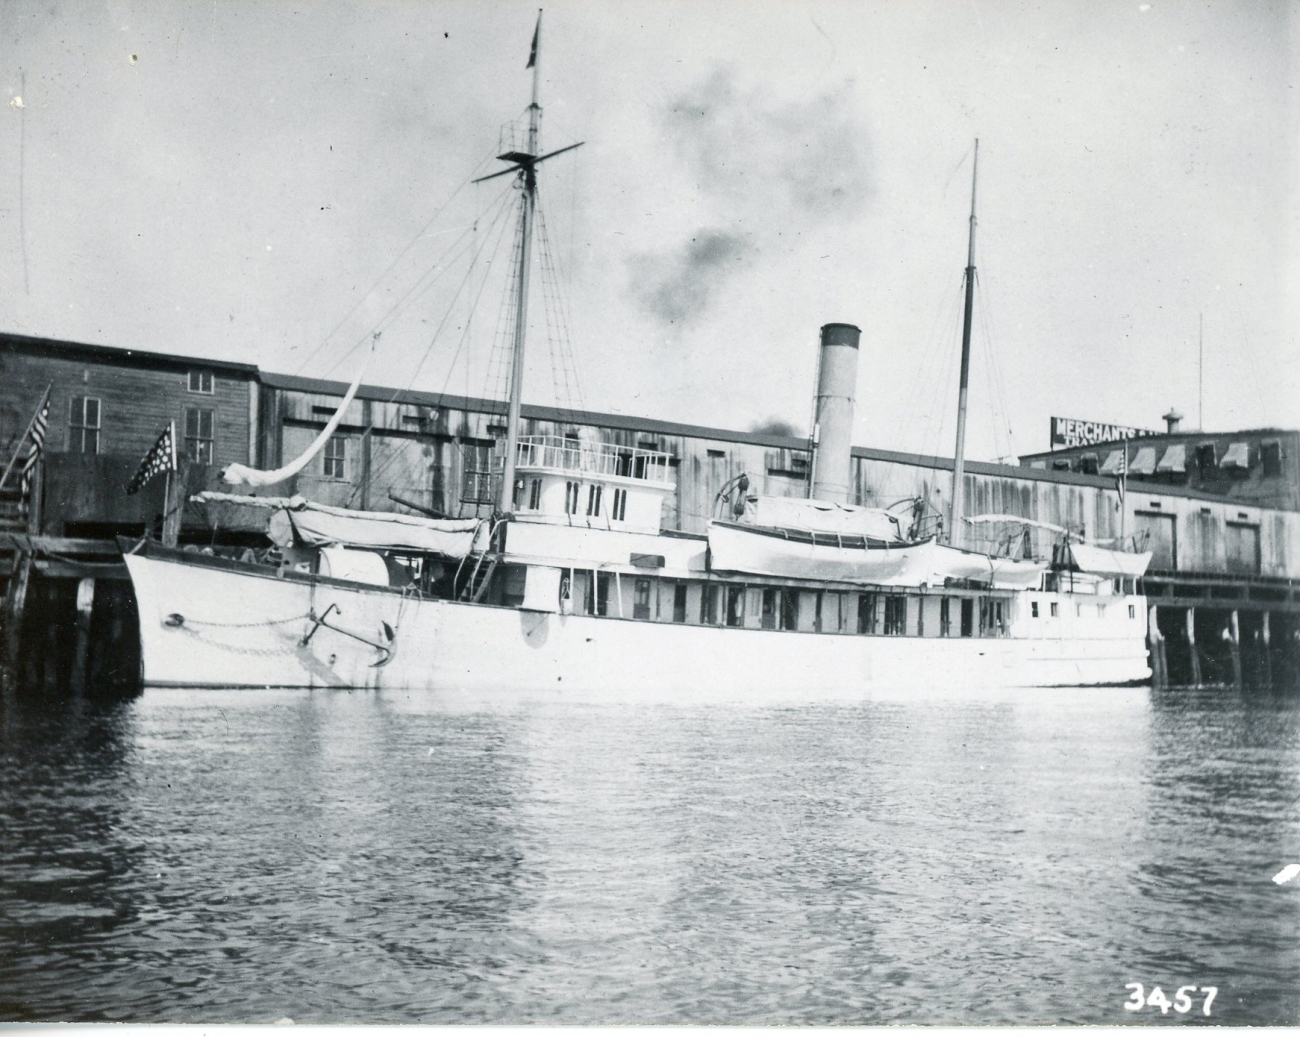 The USC&GS; Ship ENDEAVOR, a former Confederate blockade runner